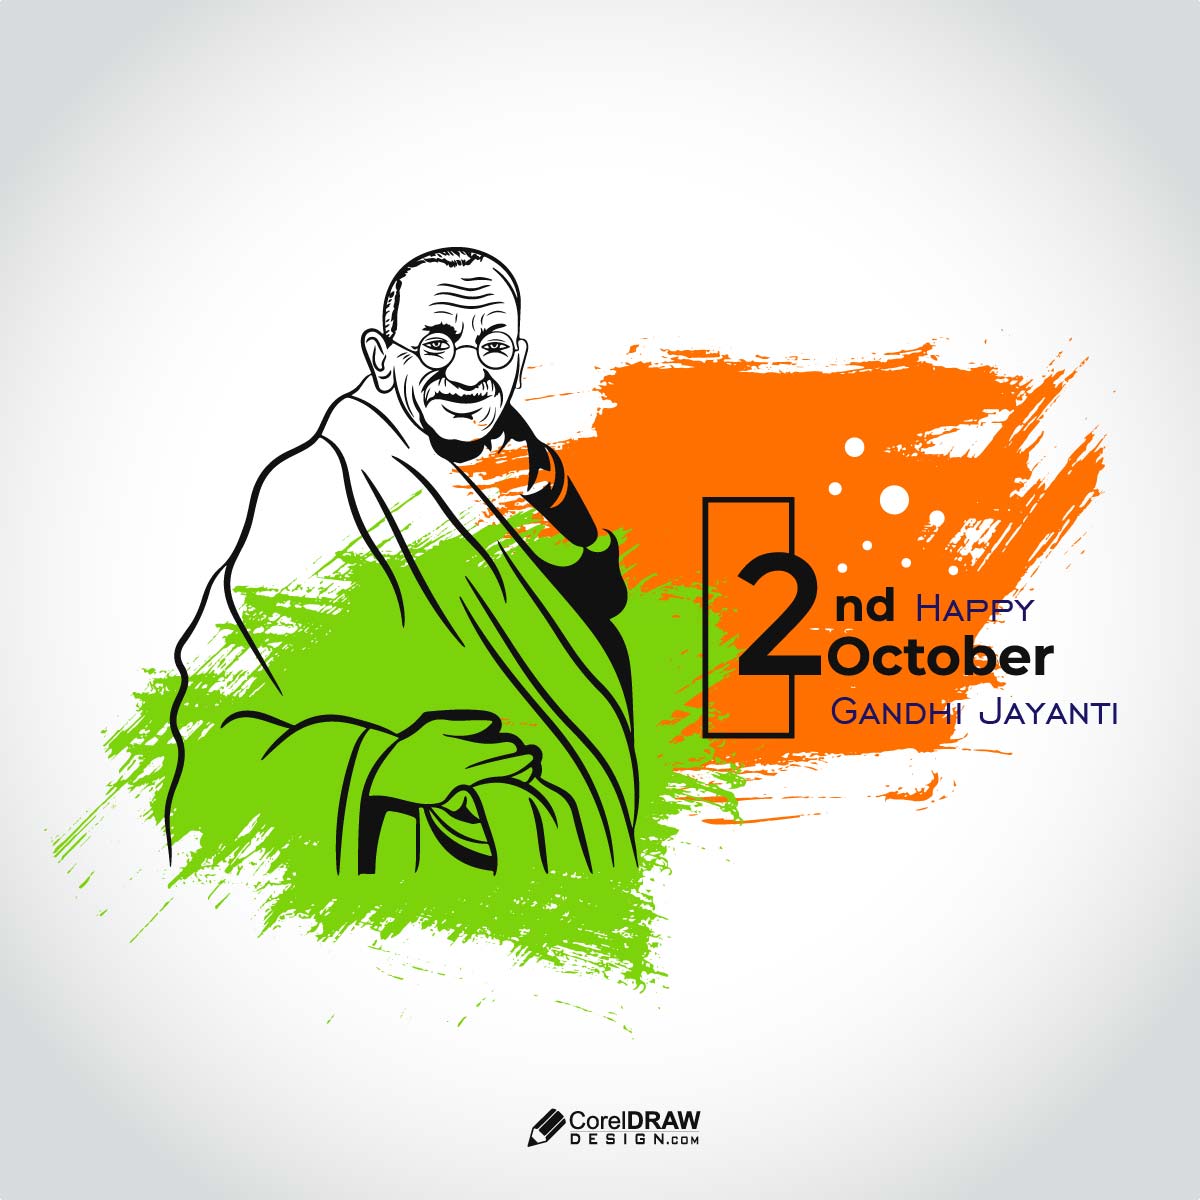 Abstract Gandhi Jayanti indian freedom fighter birth anniversary vector 